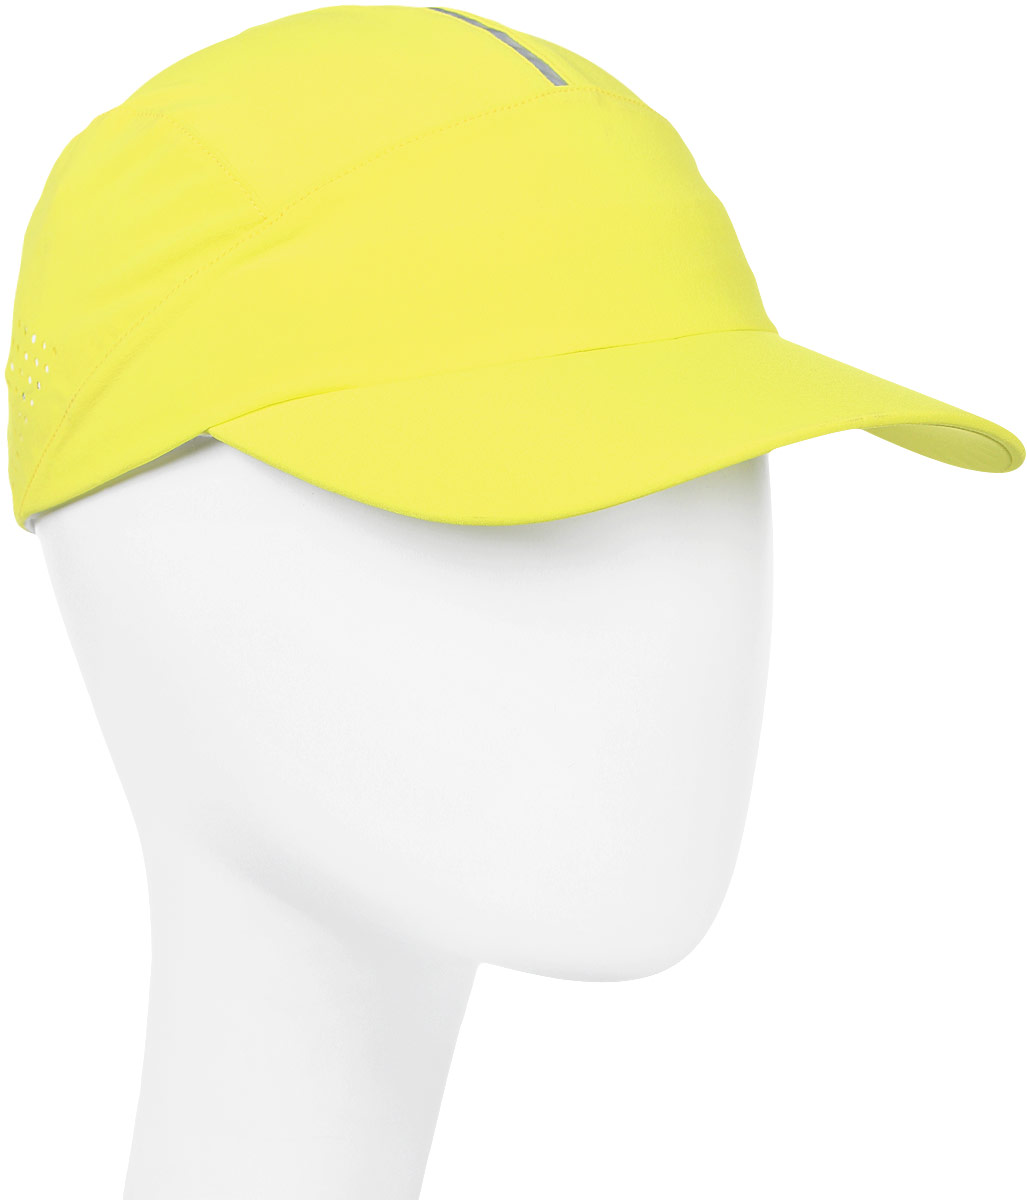 Бейсболка мужская Asics Running Cap, цвет: желтый. 155010-0486. Размер 58